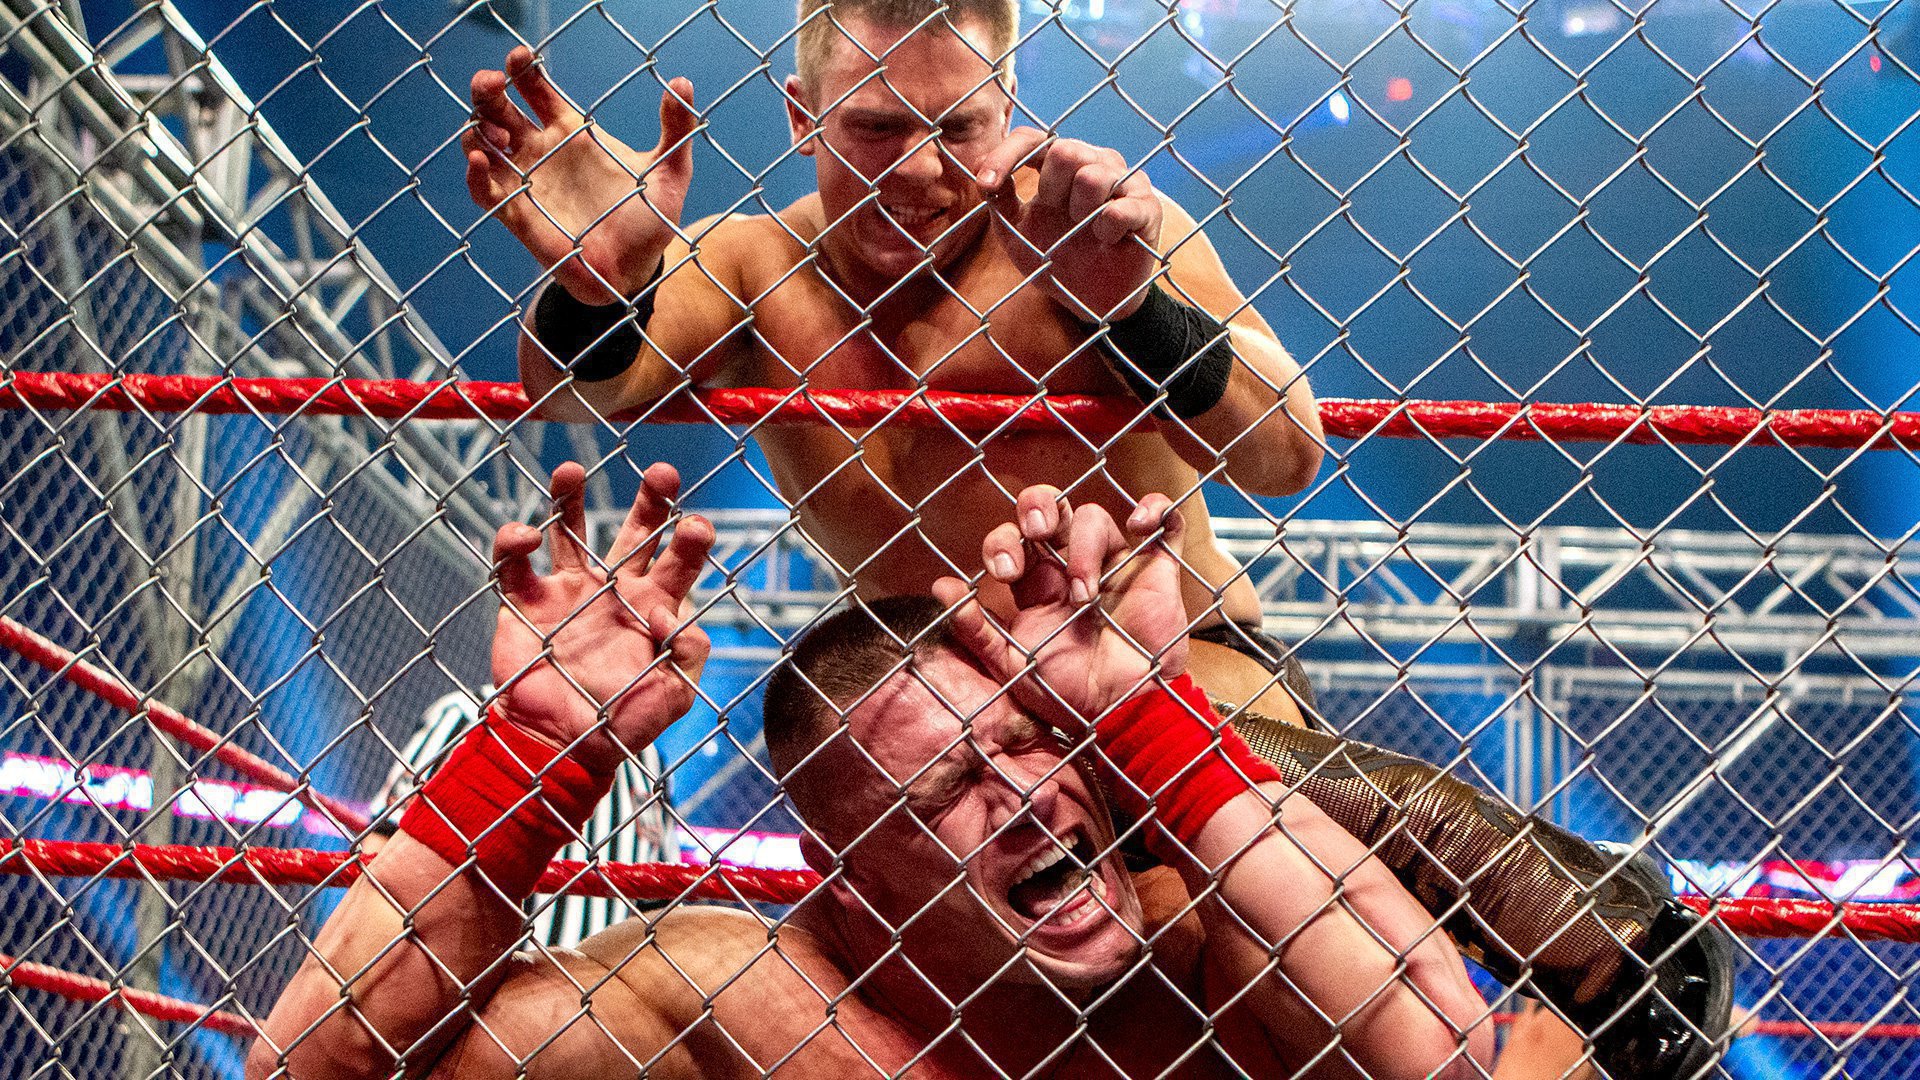 The Miz Vs John Cena Vs John Morrison Wwe Title Triple Threat Steel Cage Match Wwe Extreme Rules 2011 Full Match